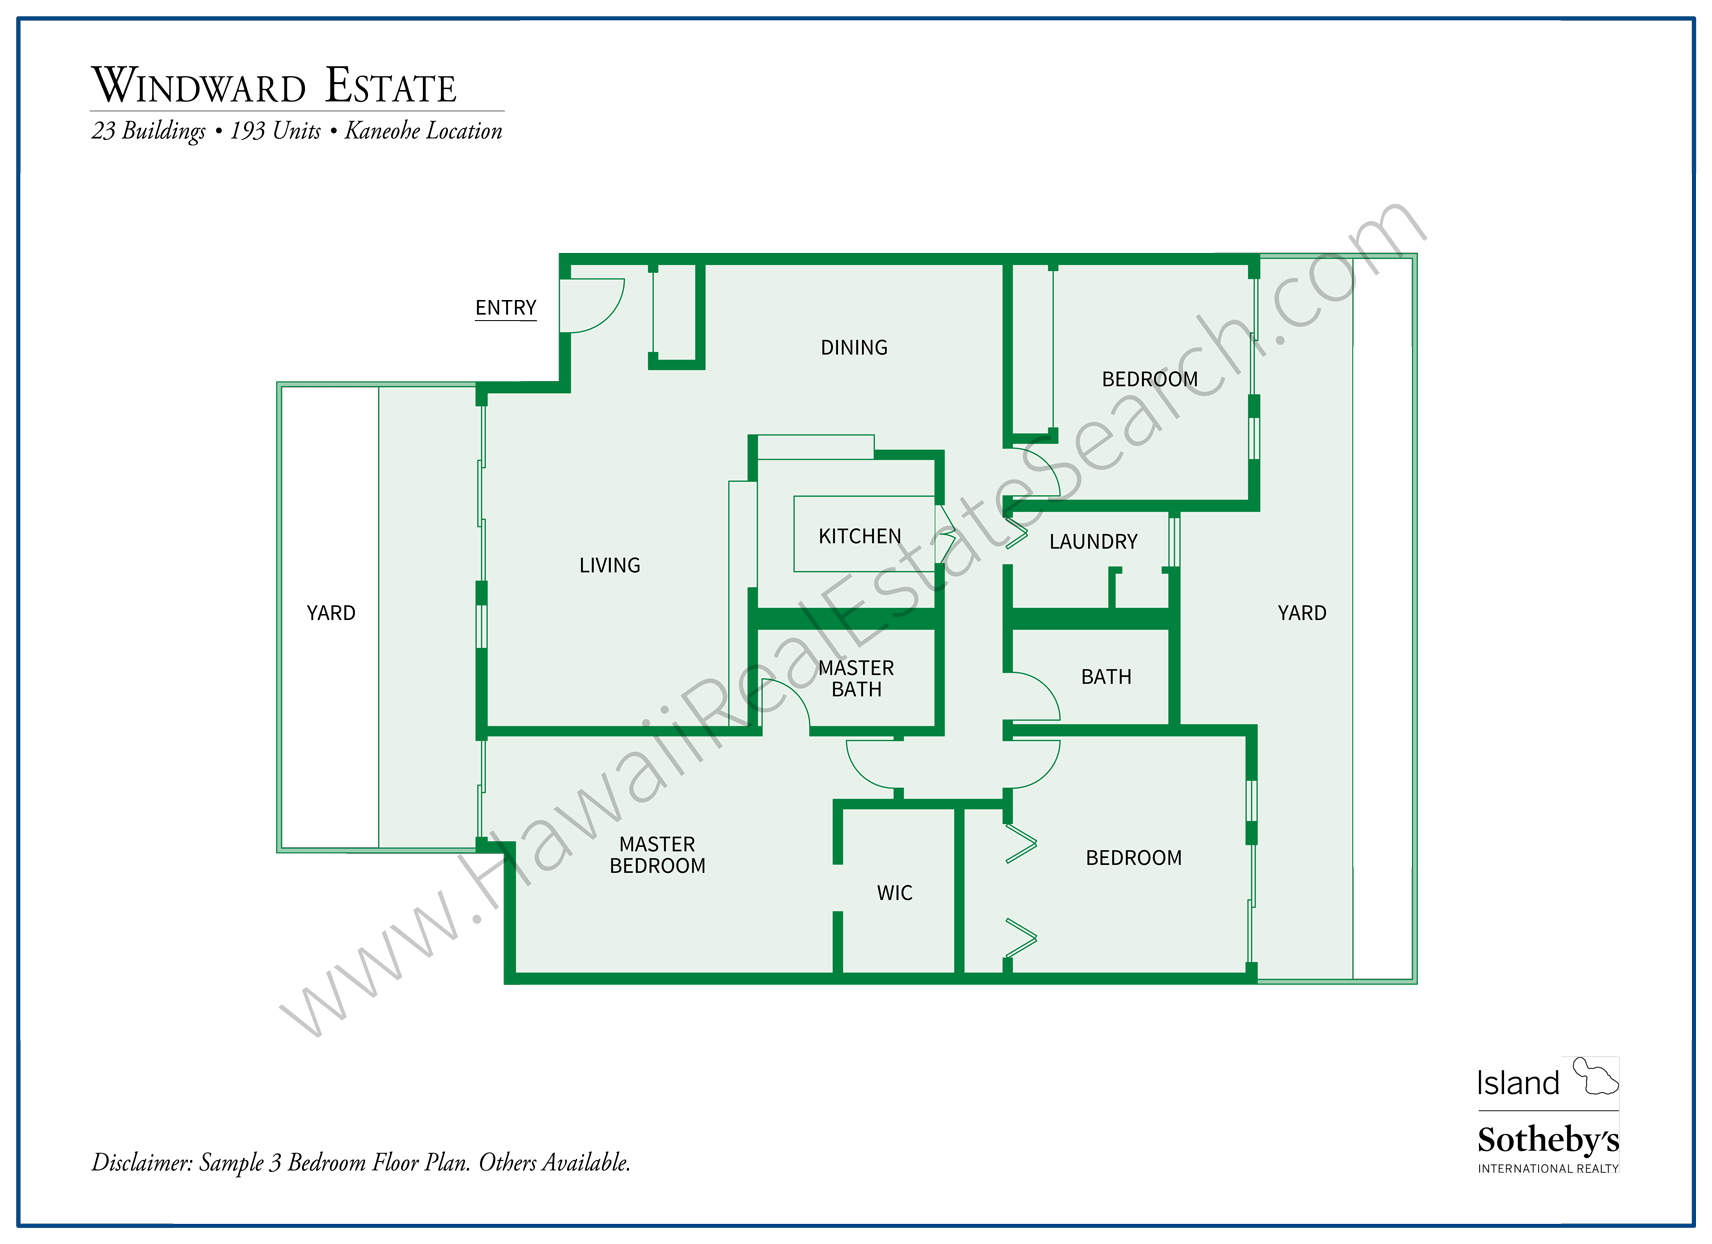 Windward Estates Floor Plan